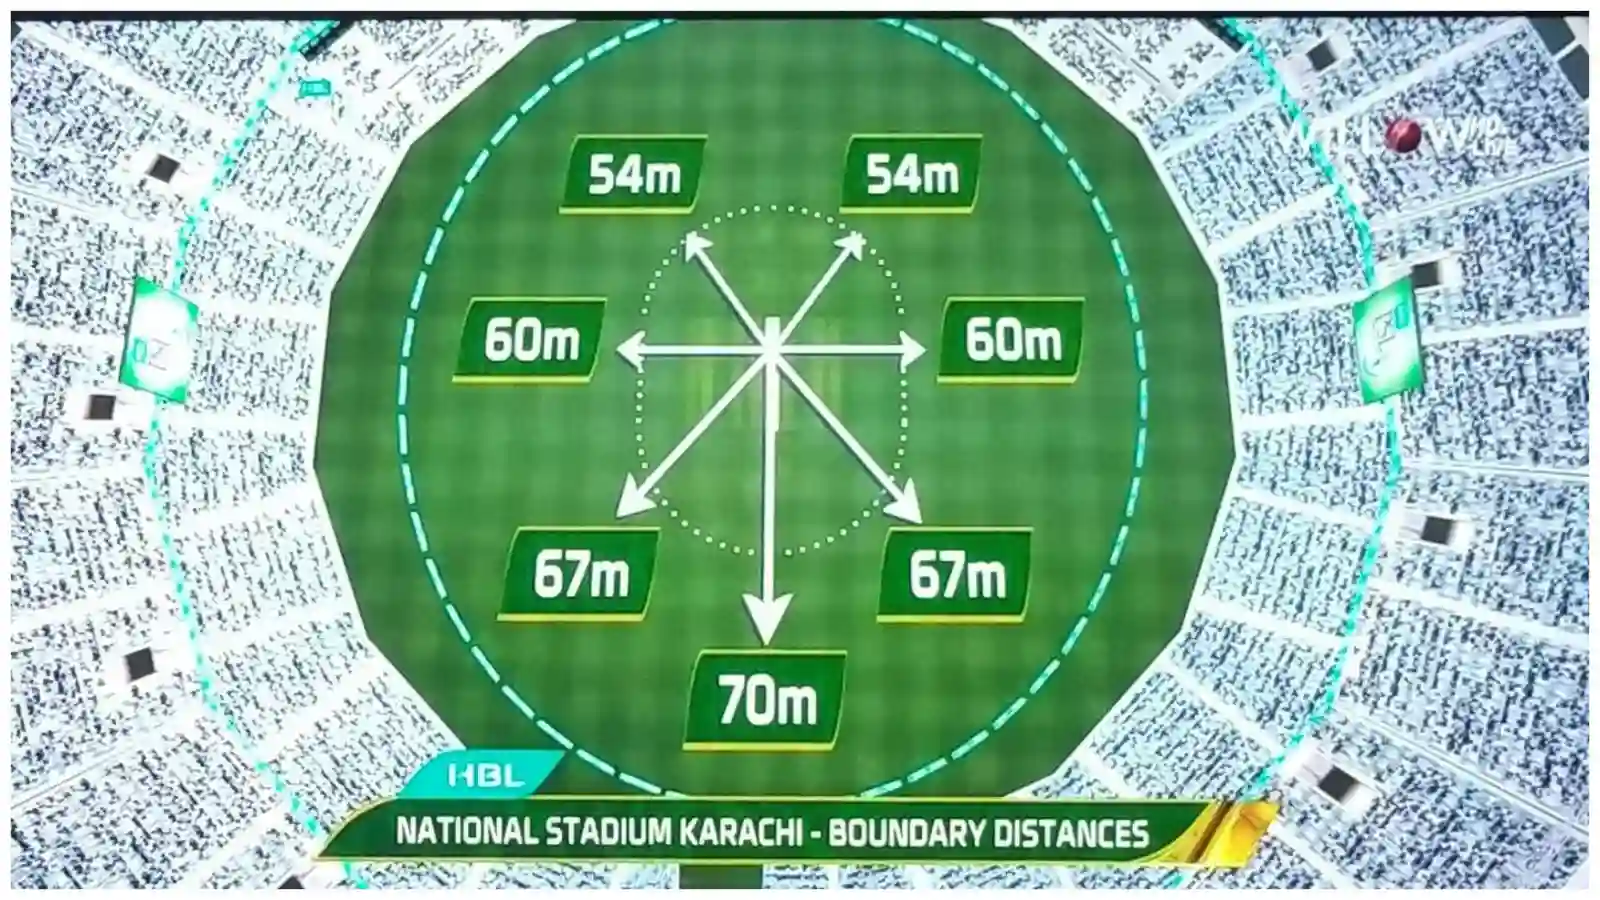 National Stadium Karachi Boundary Length and Seating Capacity